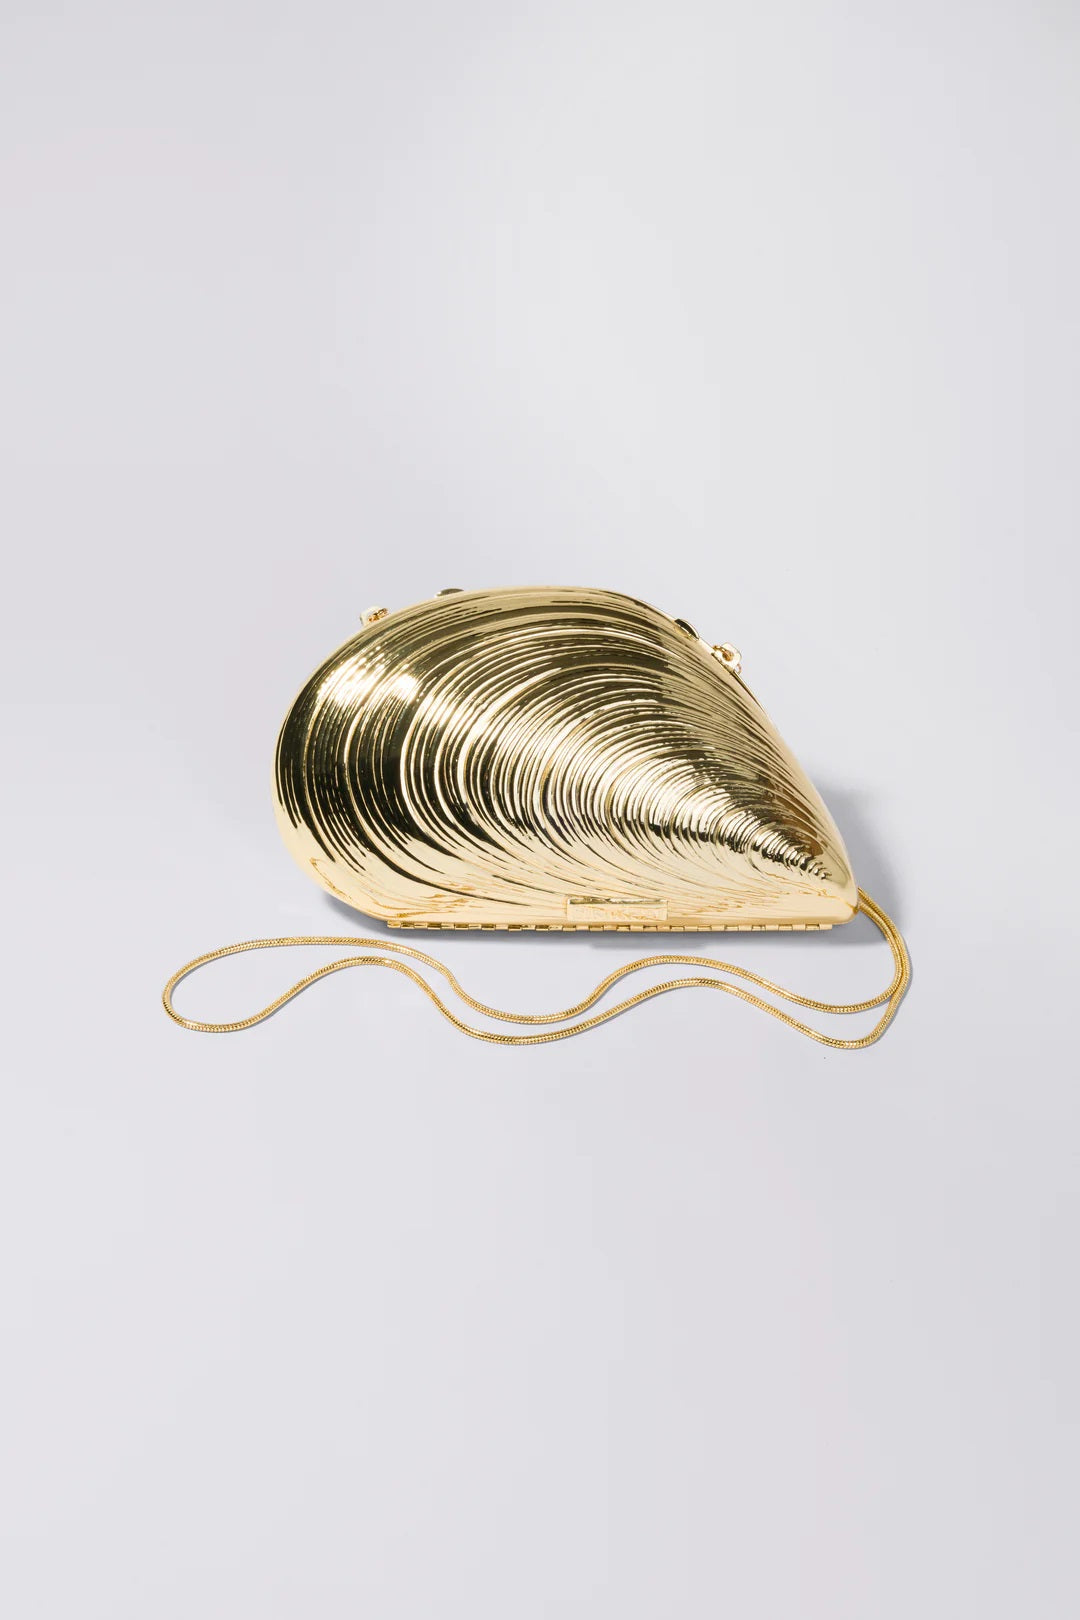 Simkhai Bridget Metal Oyster Shell Clutch - Gold